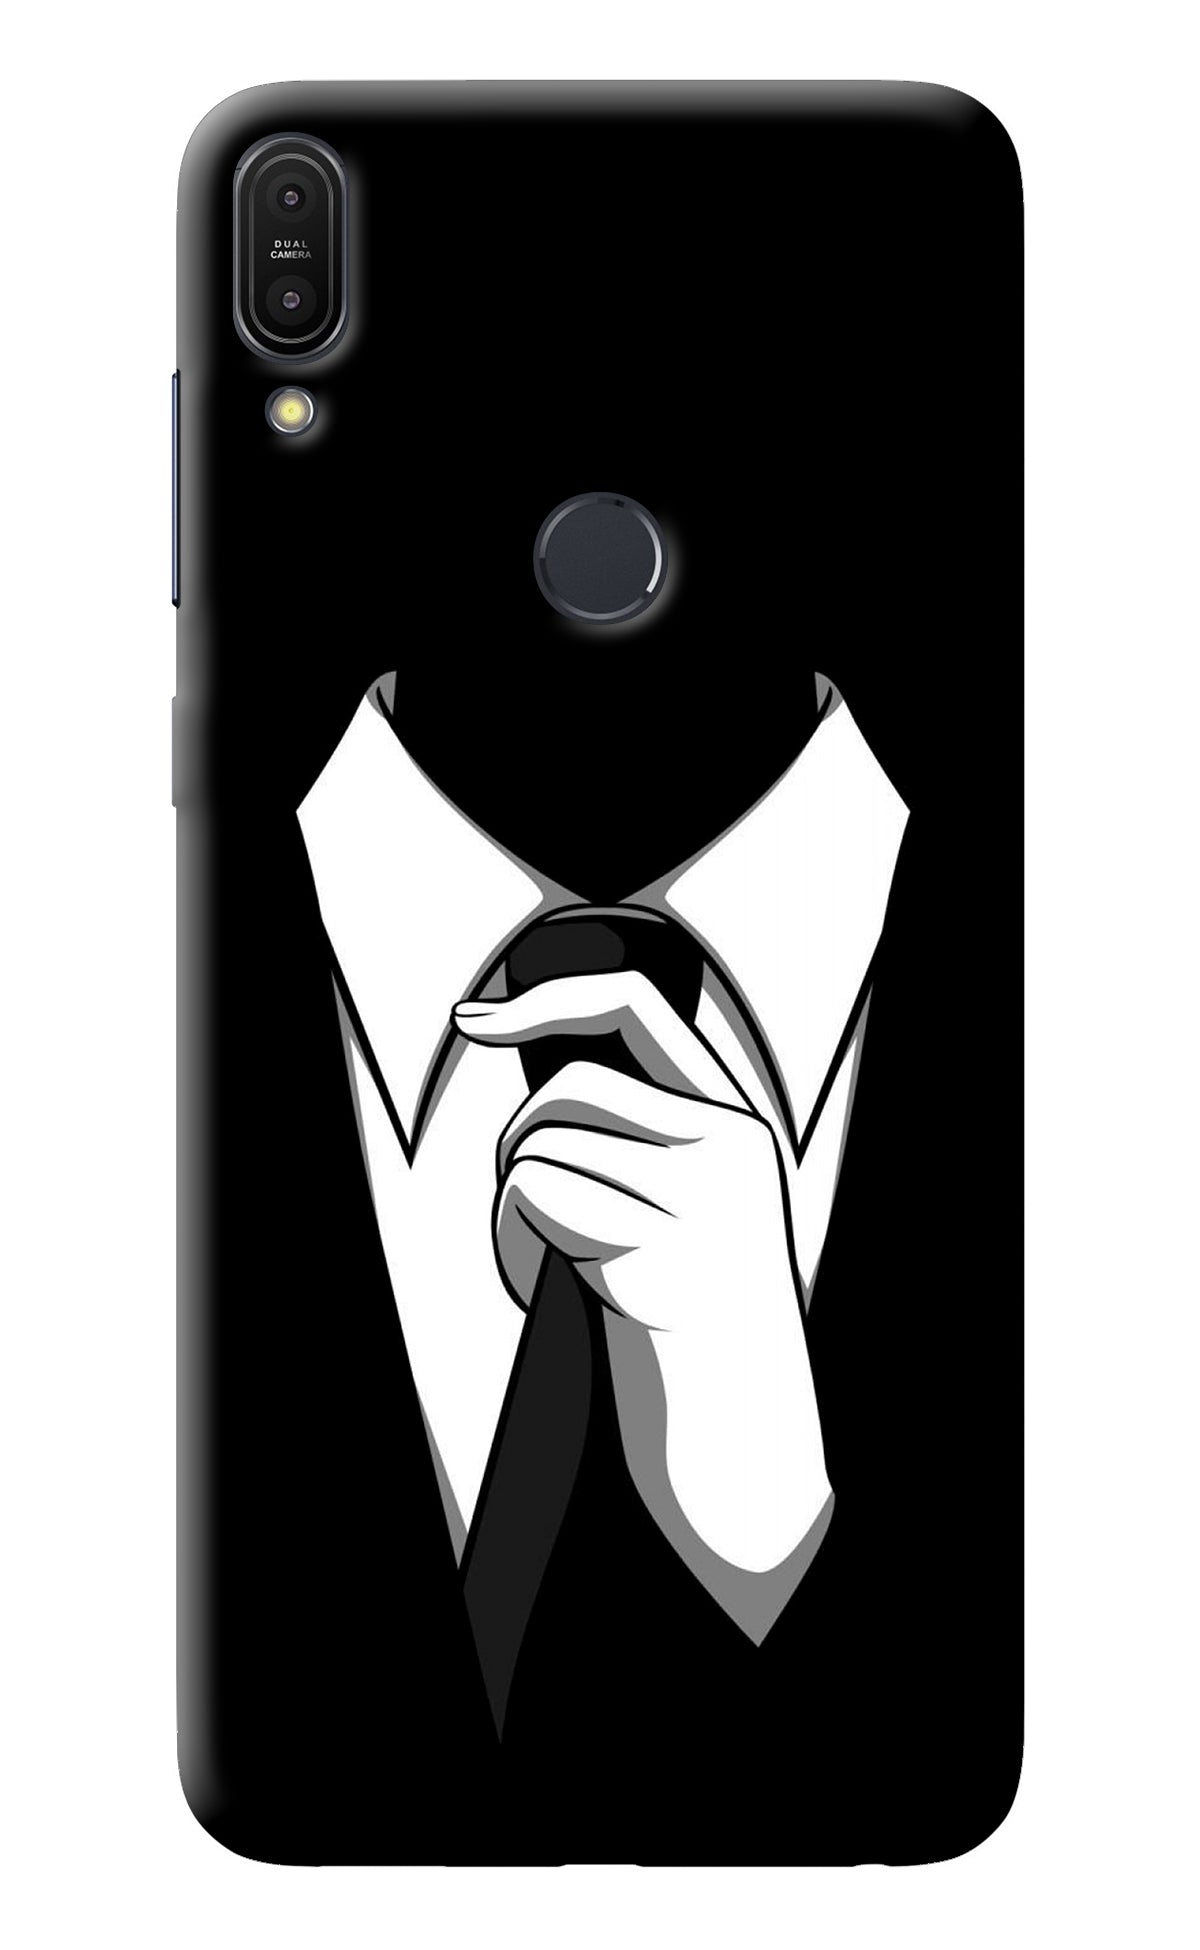 Black Tie Asus Zenfone Max Pro M1 Back Cover